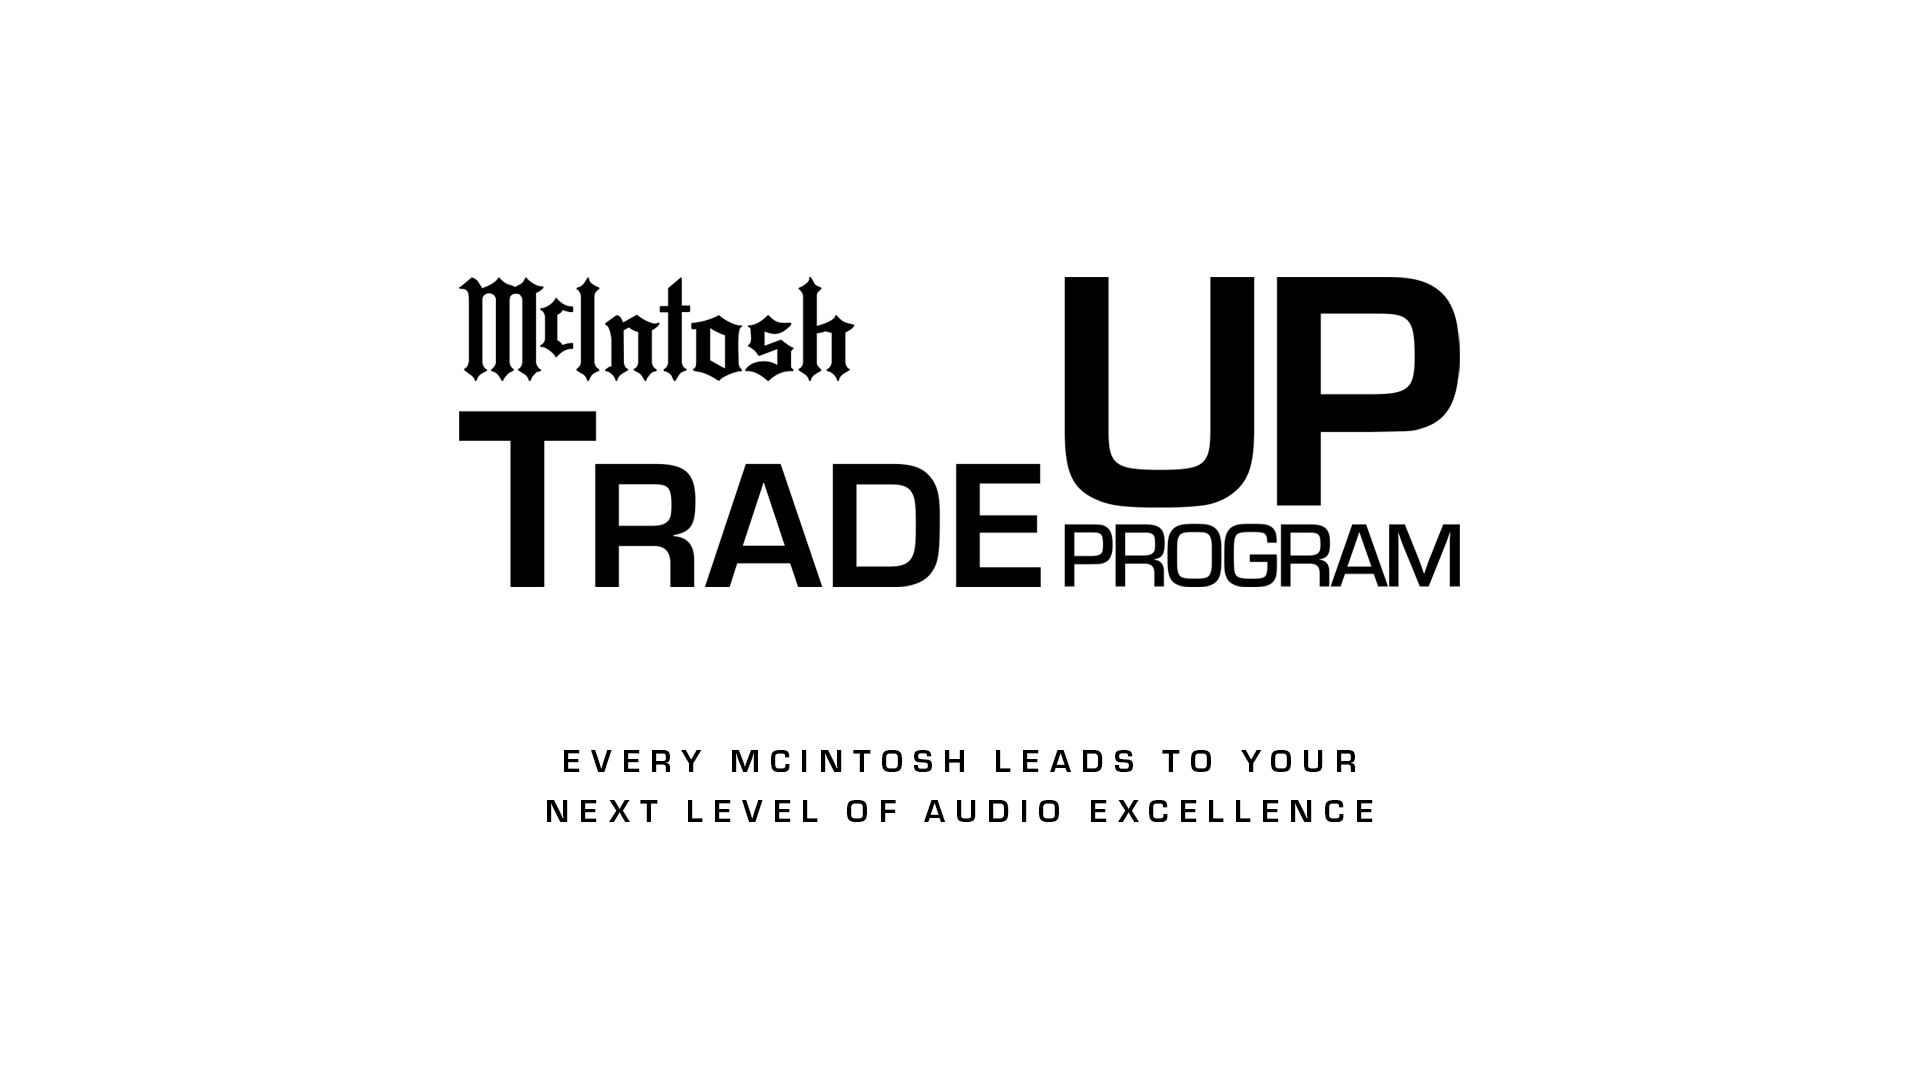 McIntosh TradeUP Program logo